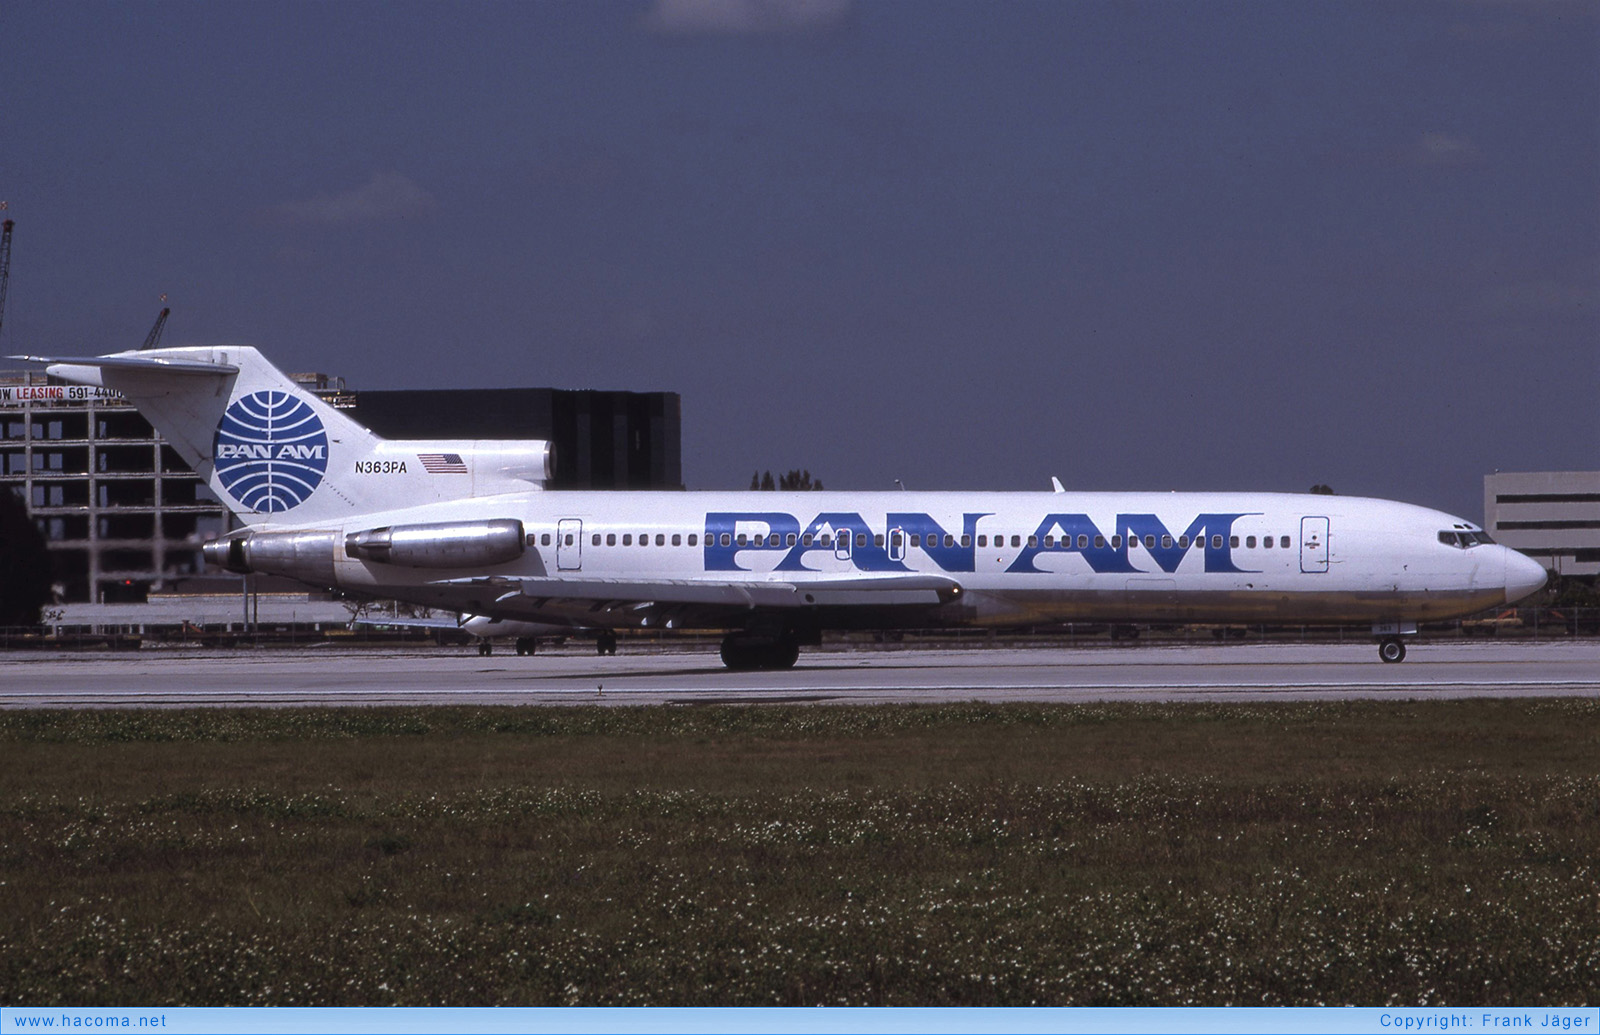 Photo of N363PA - Pan Am Clipper Racer - Miami International Airport - Feb 10, 1987